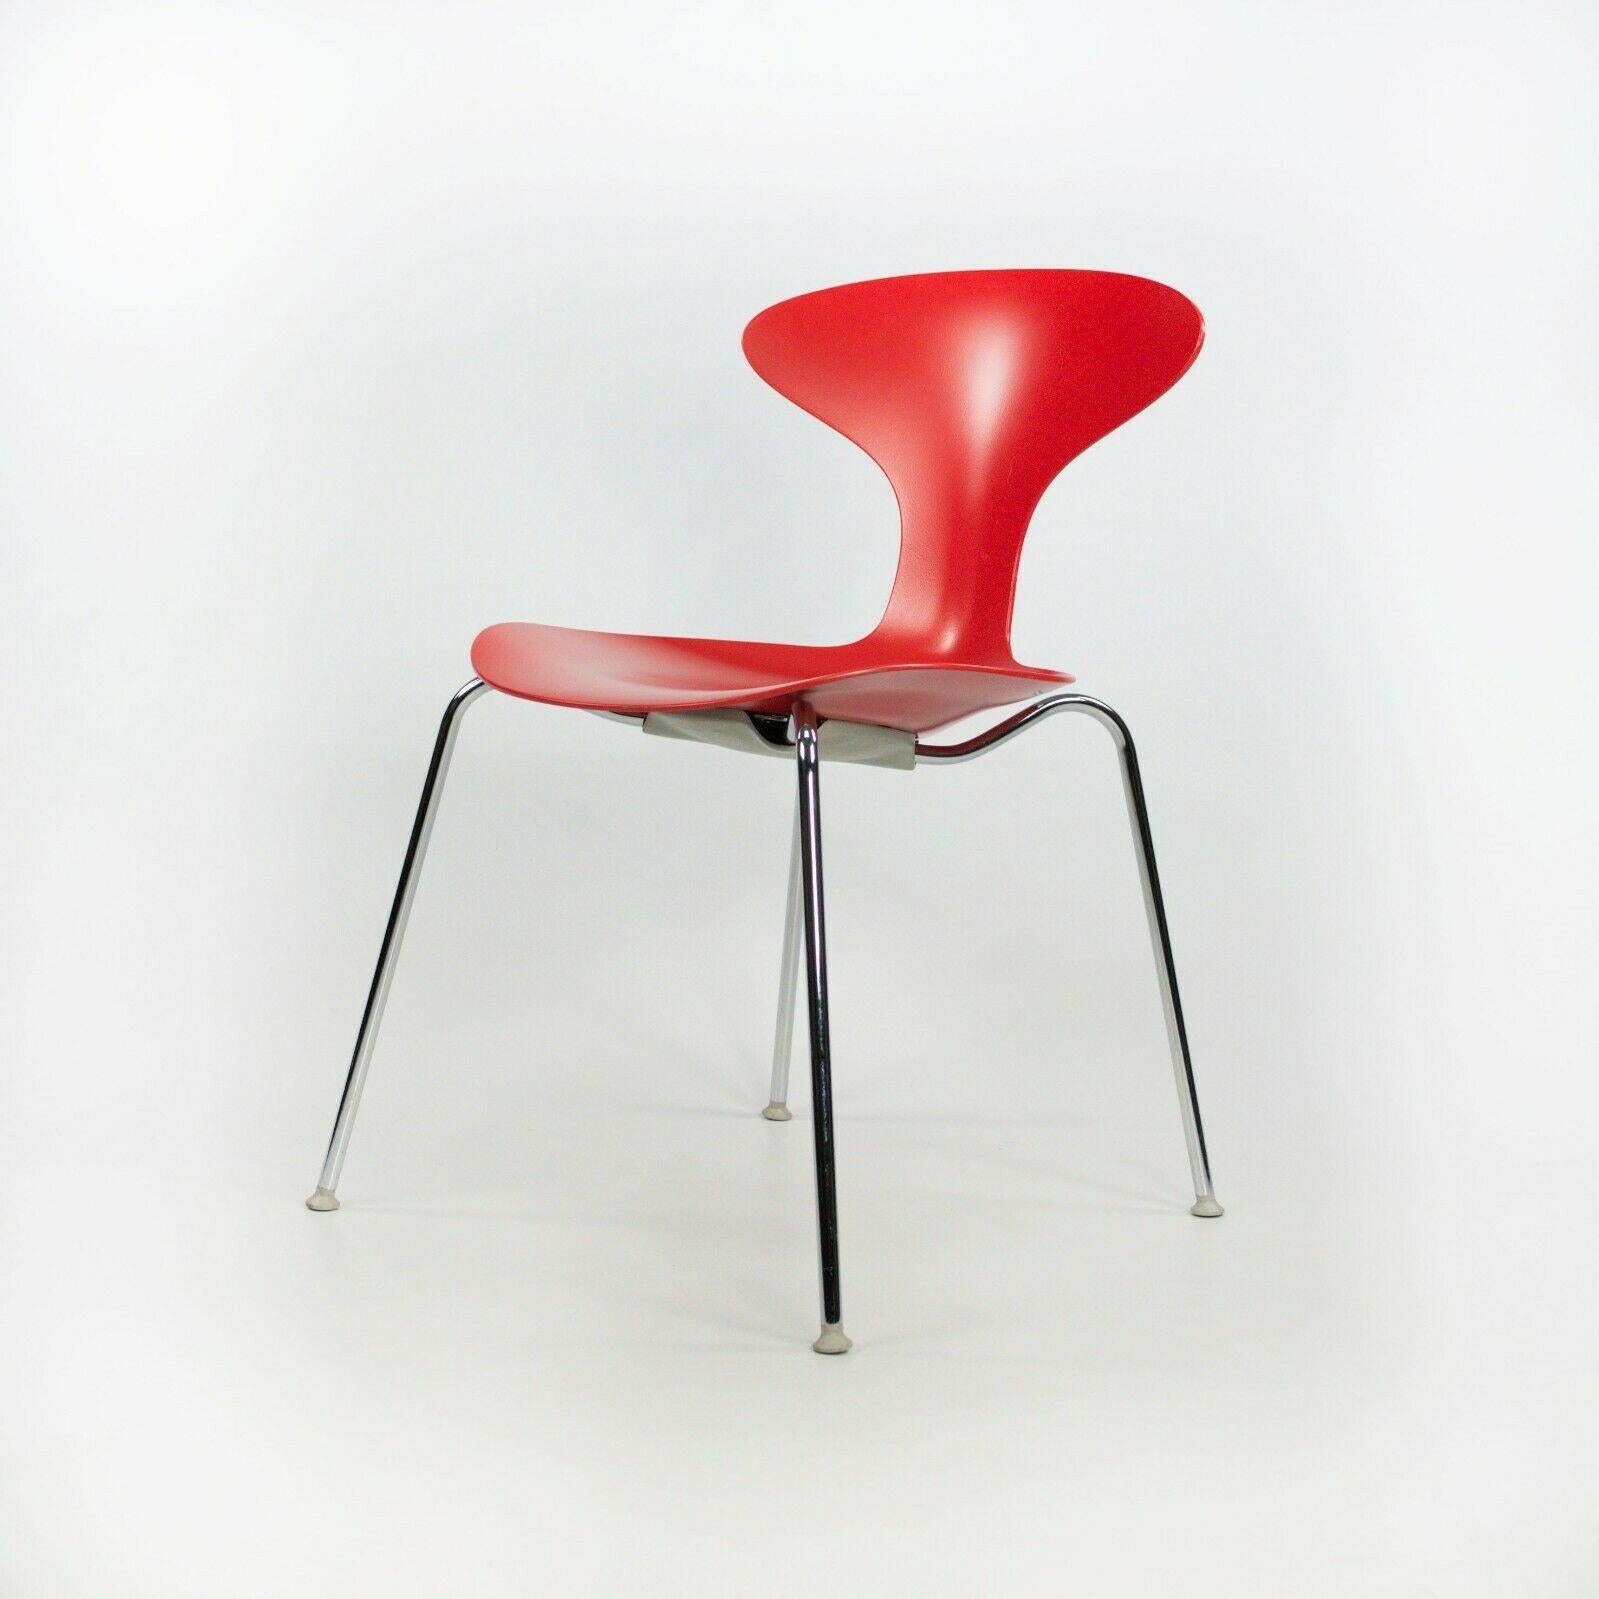 2010s Ross Lovegrove Orbit Chair by Bernhardt Design in Red Plastic Chrome Legs For Sale 2